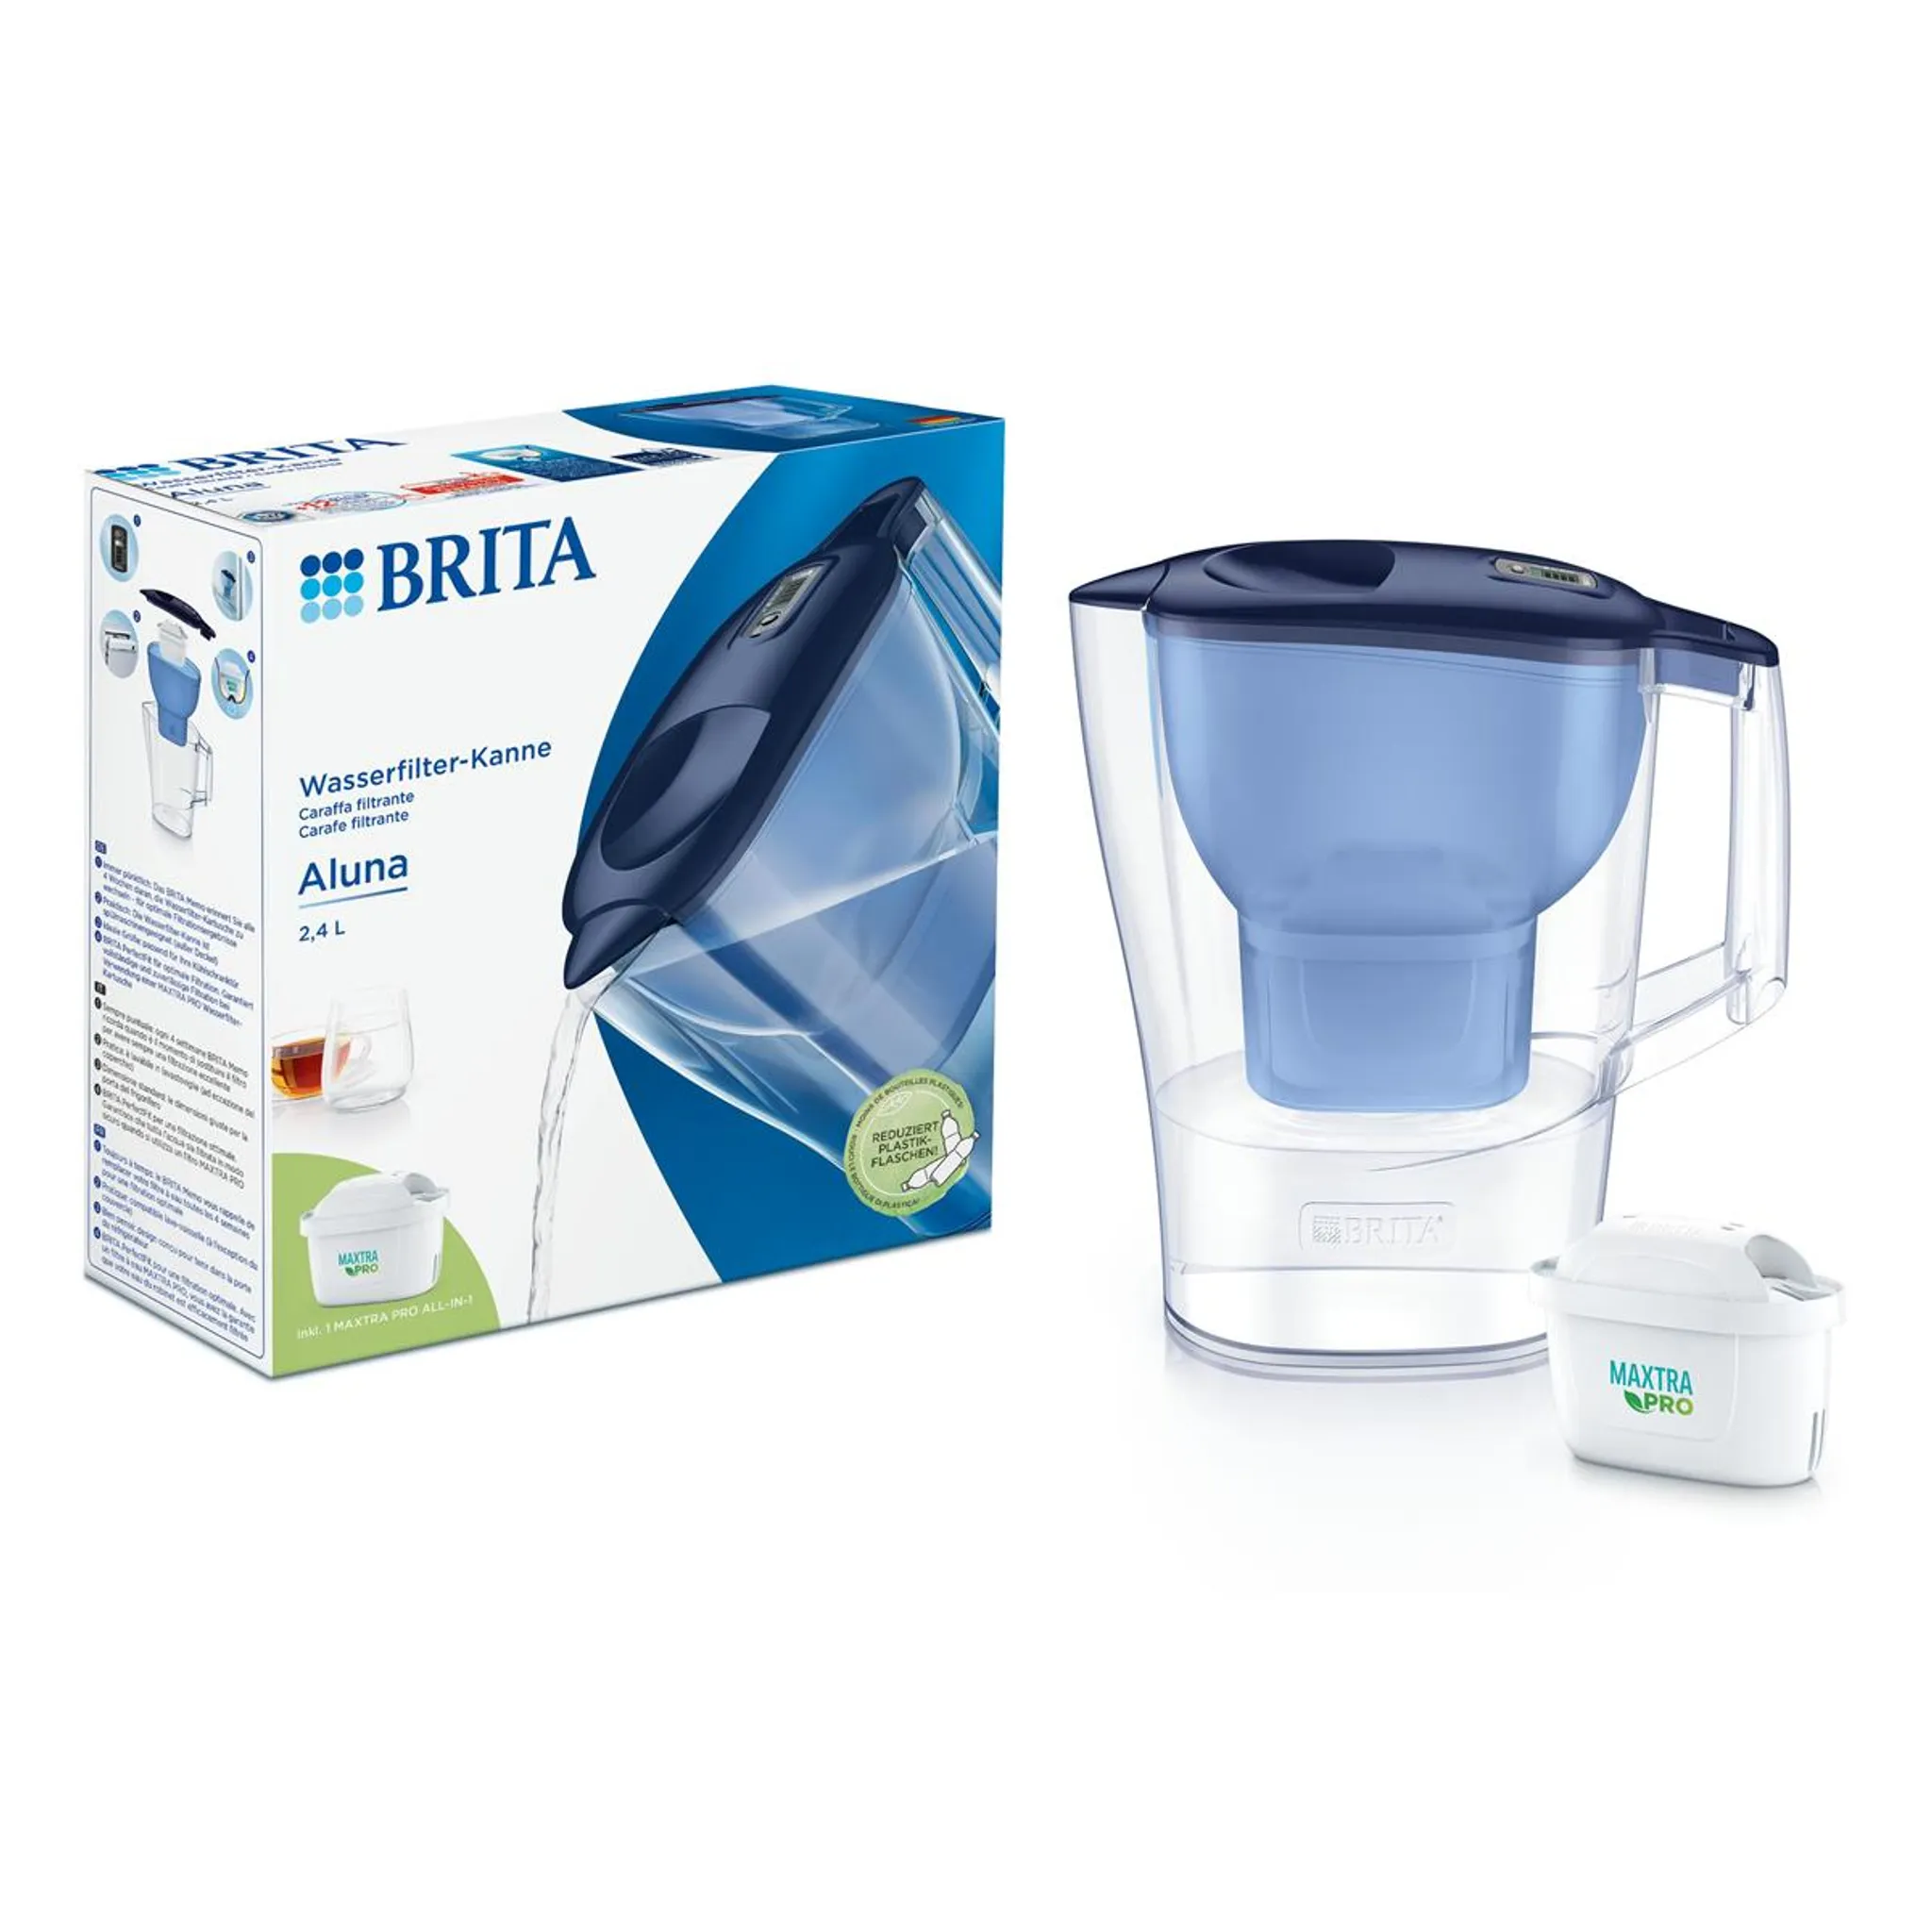 Brita Wasserfilter-Kanne Aluna blau 2,4L